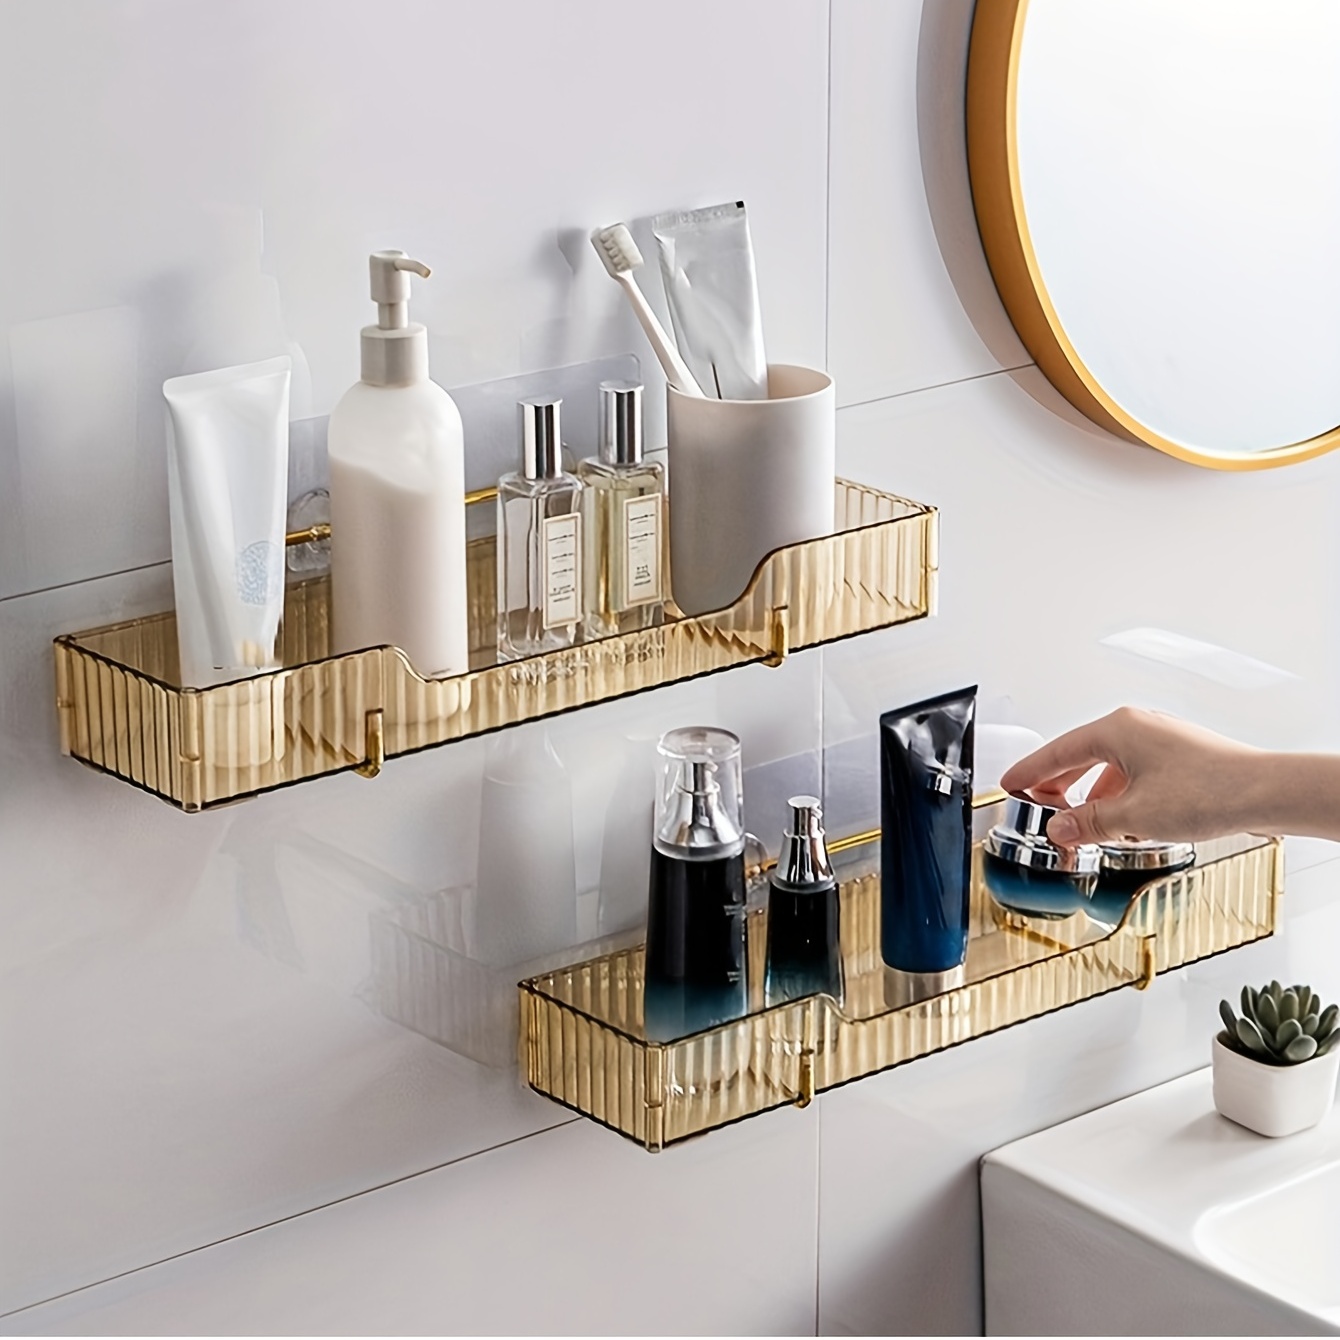 Laigoo Adhesive Floating Shelves Non-Drilling, Set of 3, Display Picture  Ledge Shelf U Bathroom Shelf Organizer for Home/Wall Decor/Ki